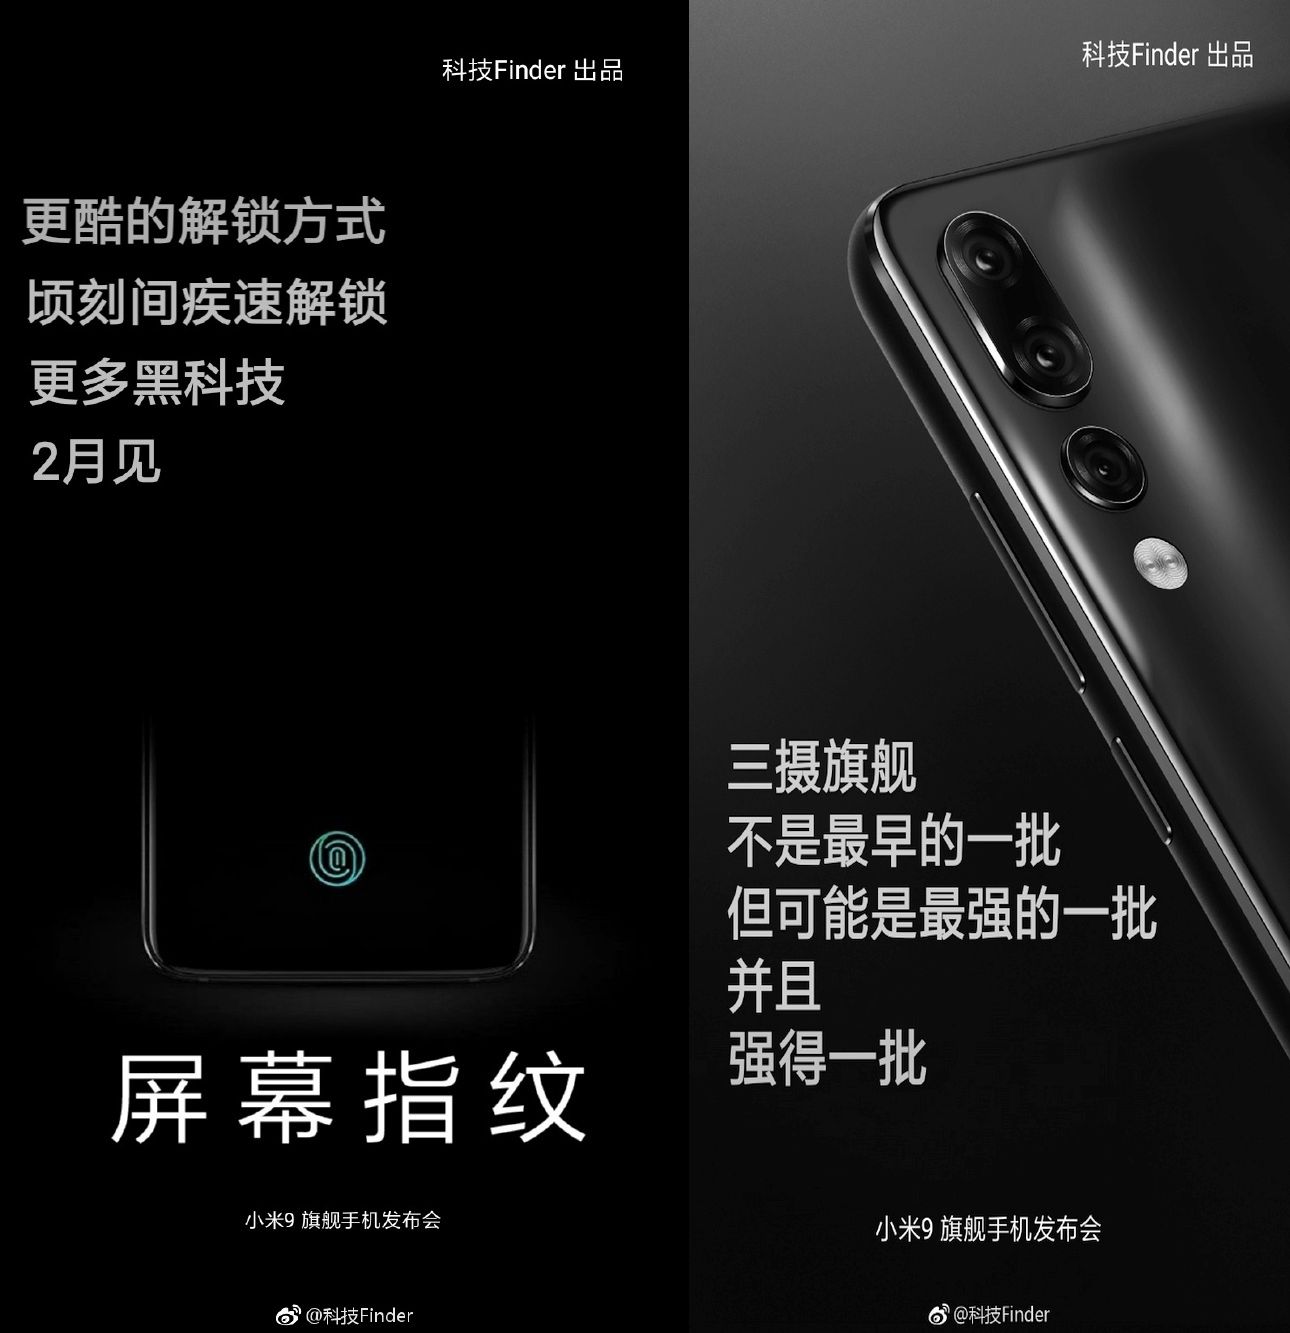 Xiaomi Mi 9 February Launch Rumor Said